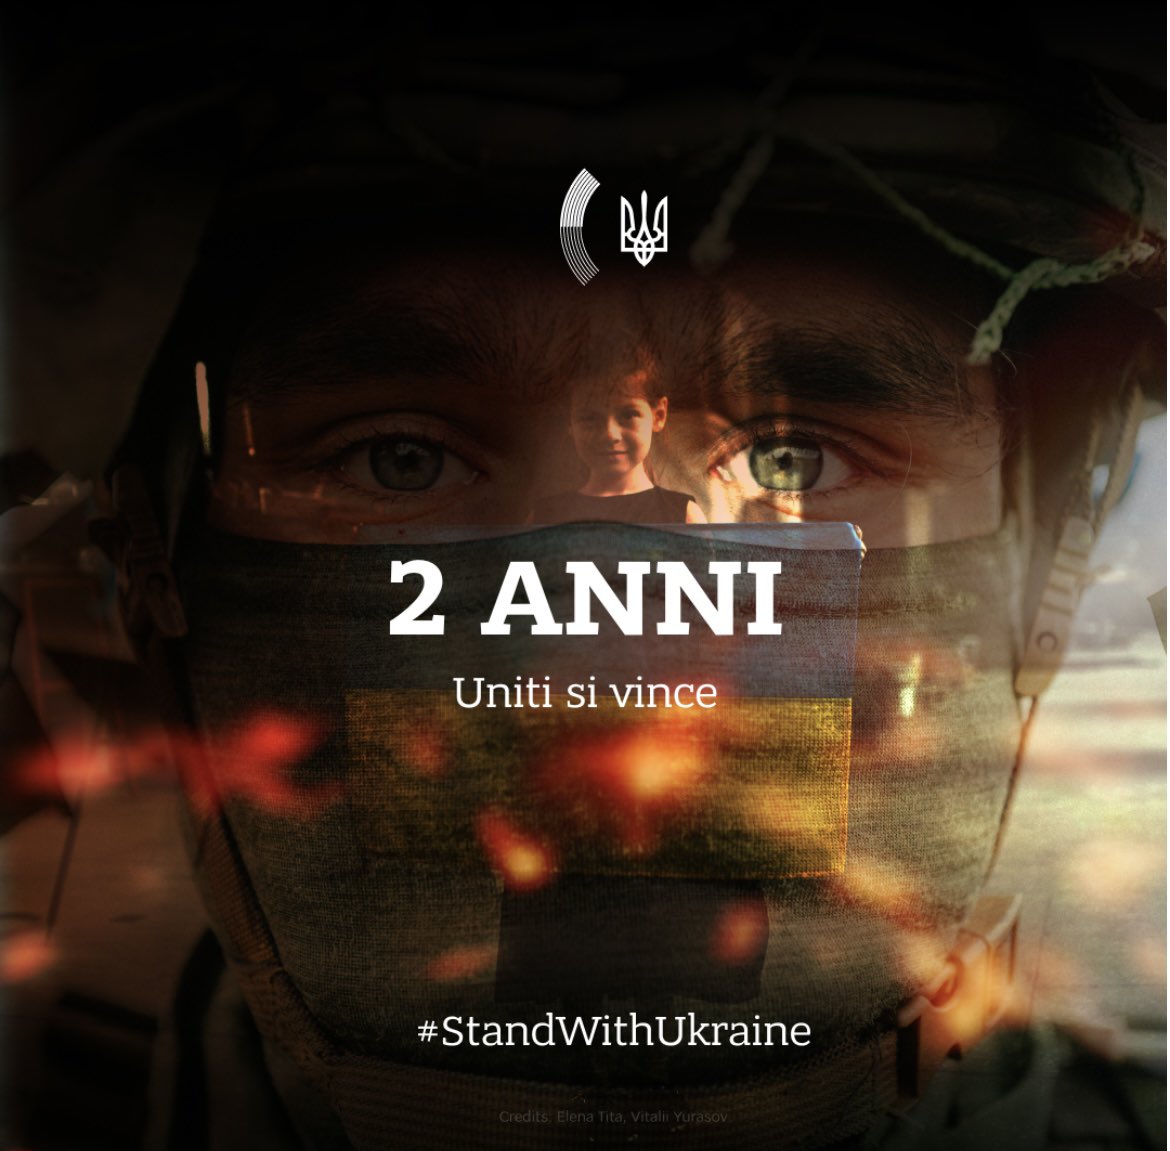 #StandWithUkraine
#StandForFreedom